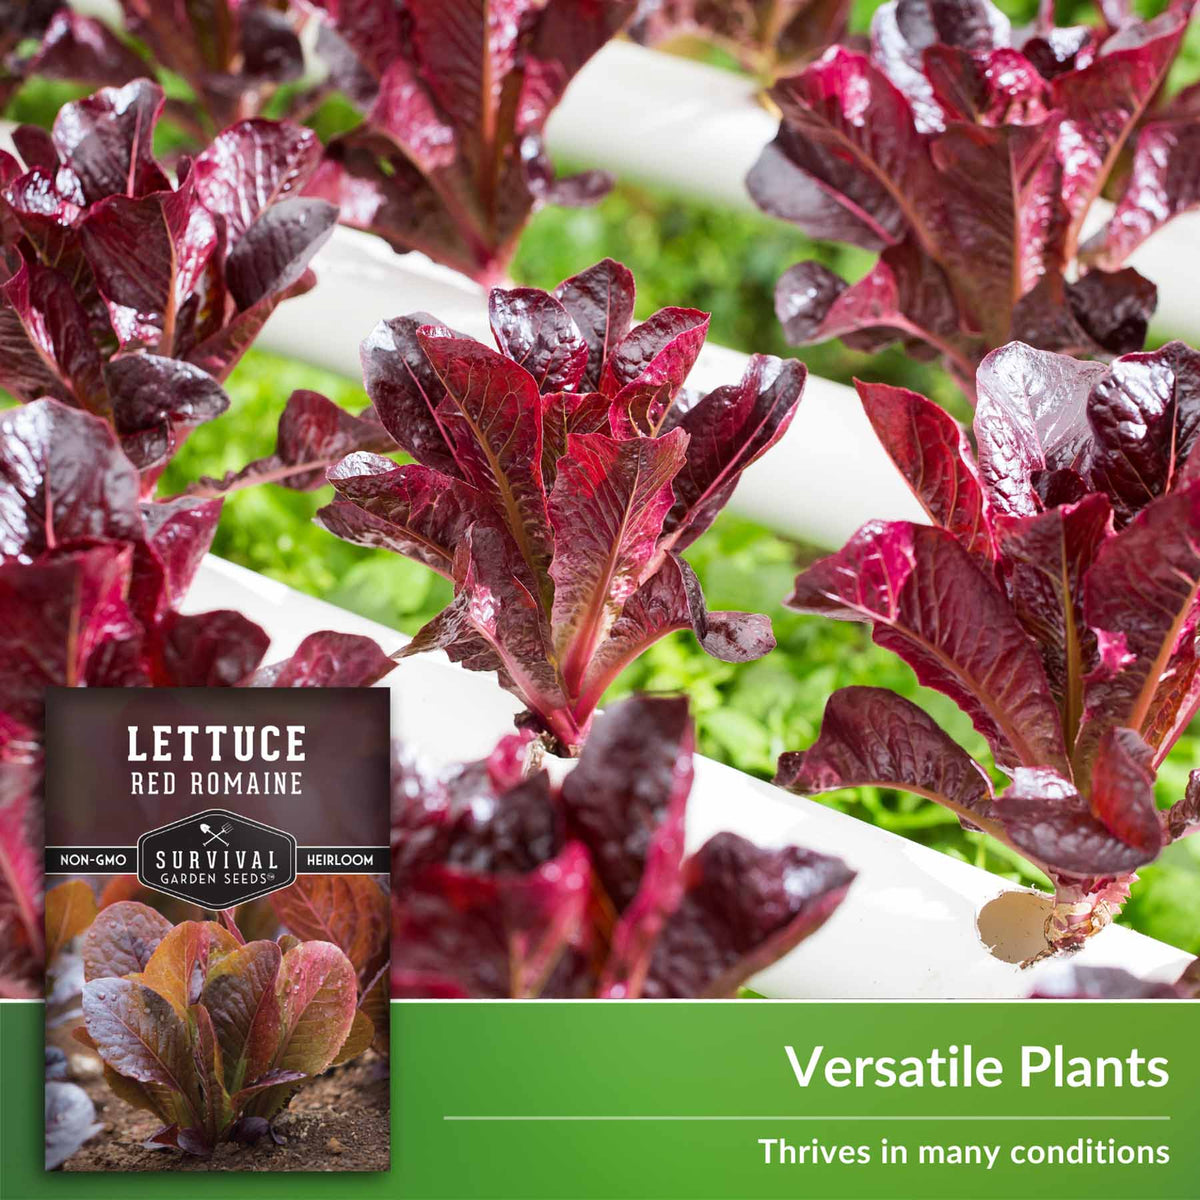 Versatile plants